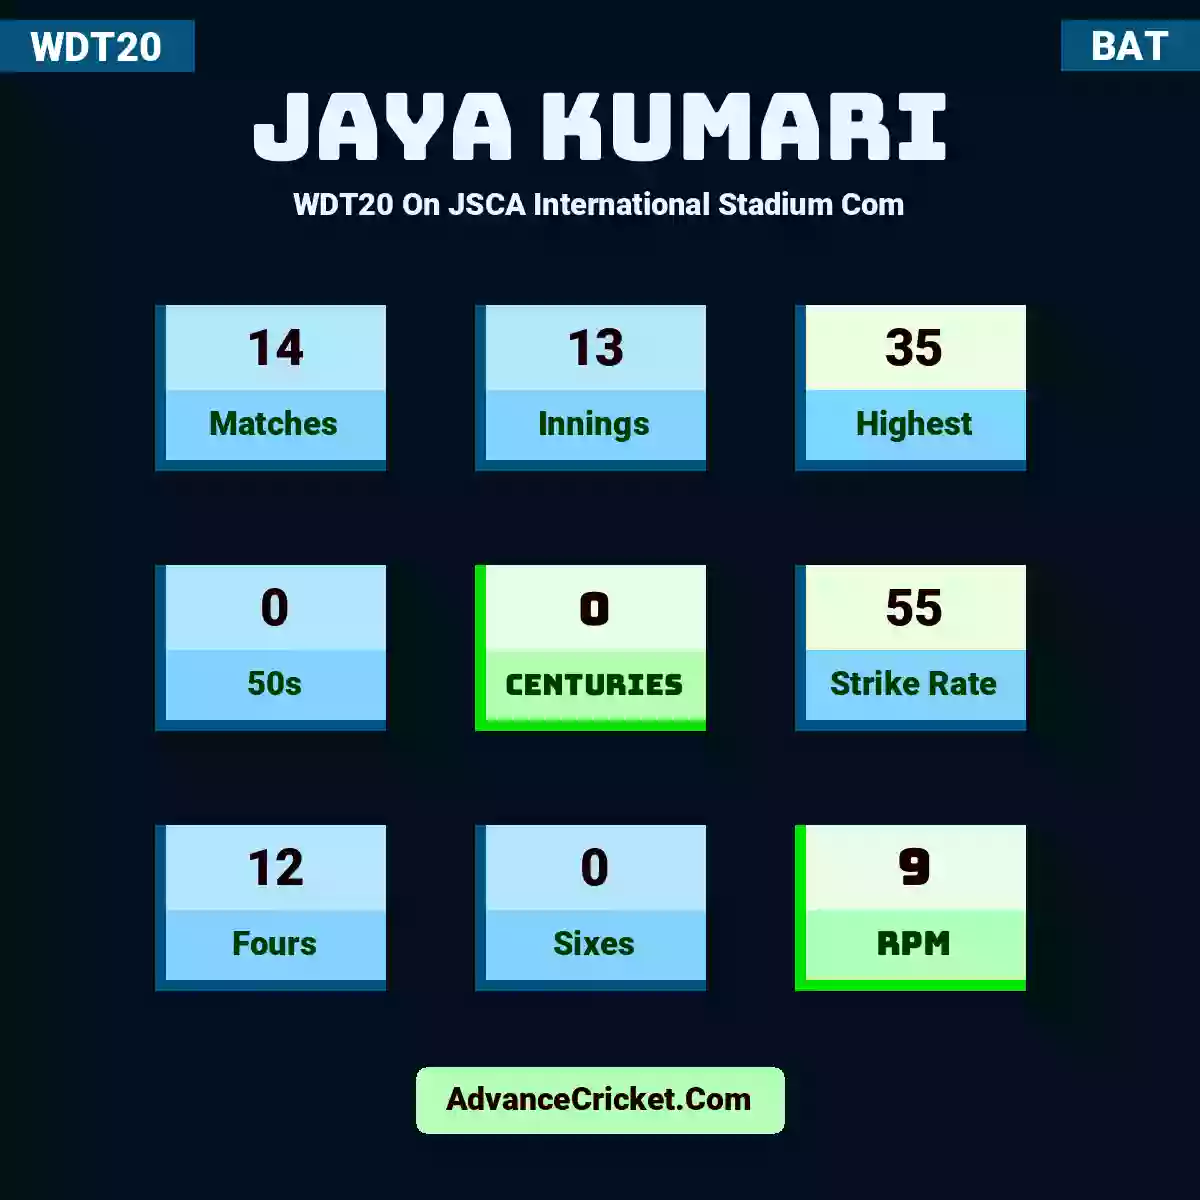 Jaya Kumari WDT20  On JSCA International Stadium Com, Jaya Kumari played 14 matches, scored 35 runs as highest, 0 half-centuries, and 0 centuries, with a strike rate of 55. J.Kumari hit 12 fours and 0 sixes, with an RPM of 9.